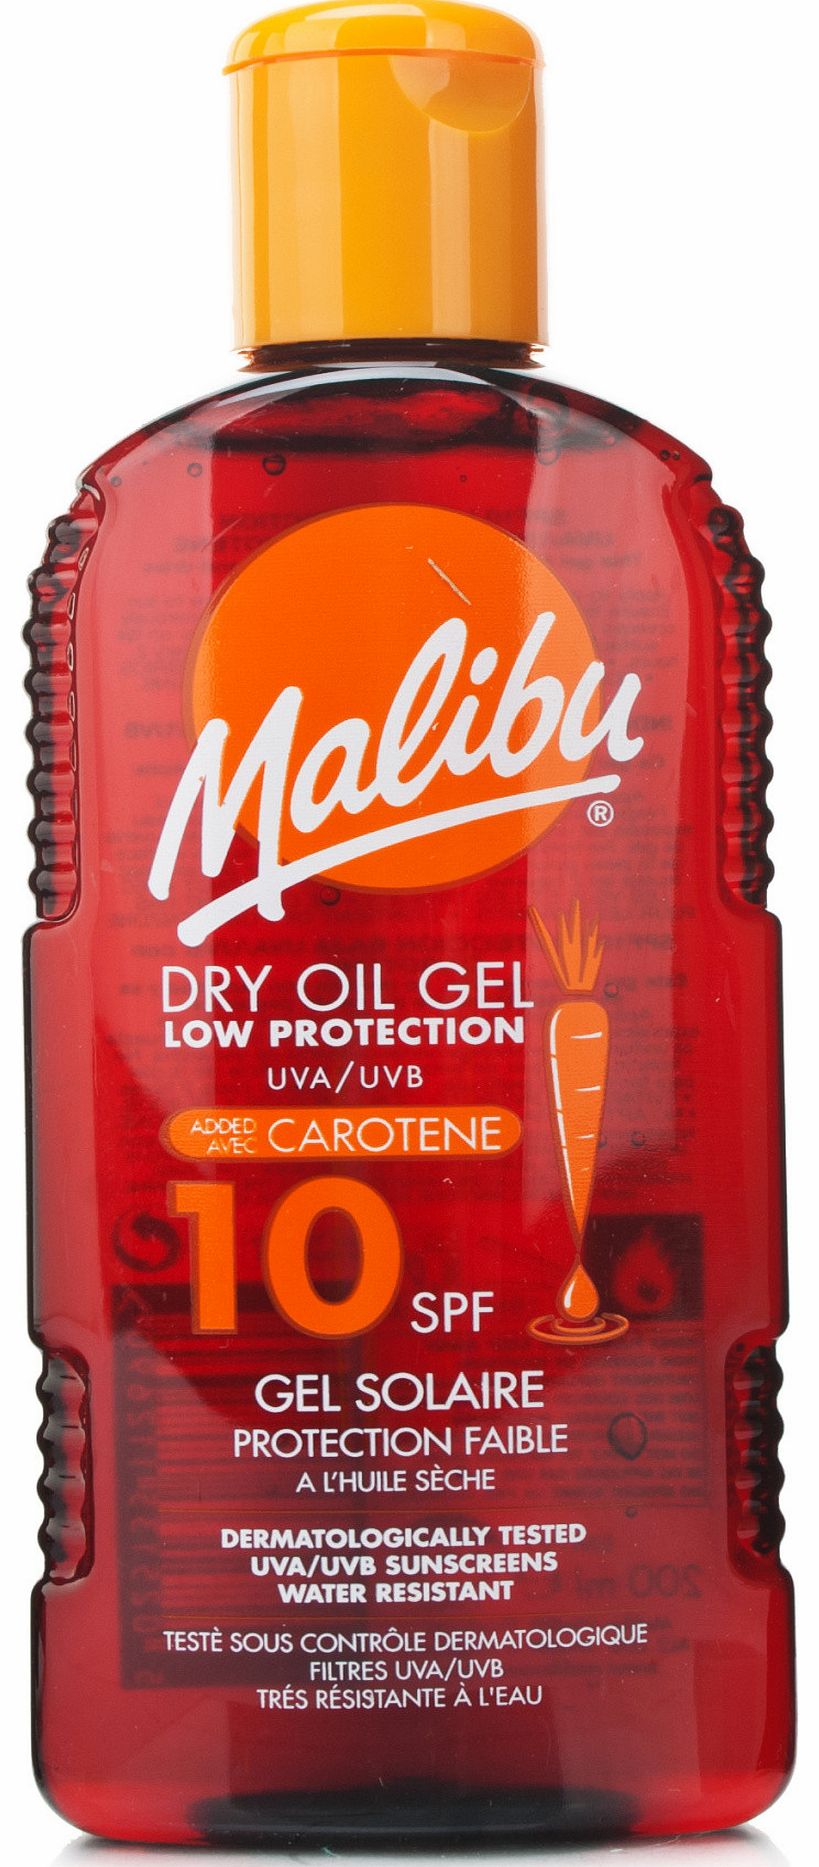 Dry Oil Gel with Carotene SPF10